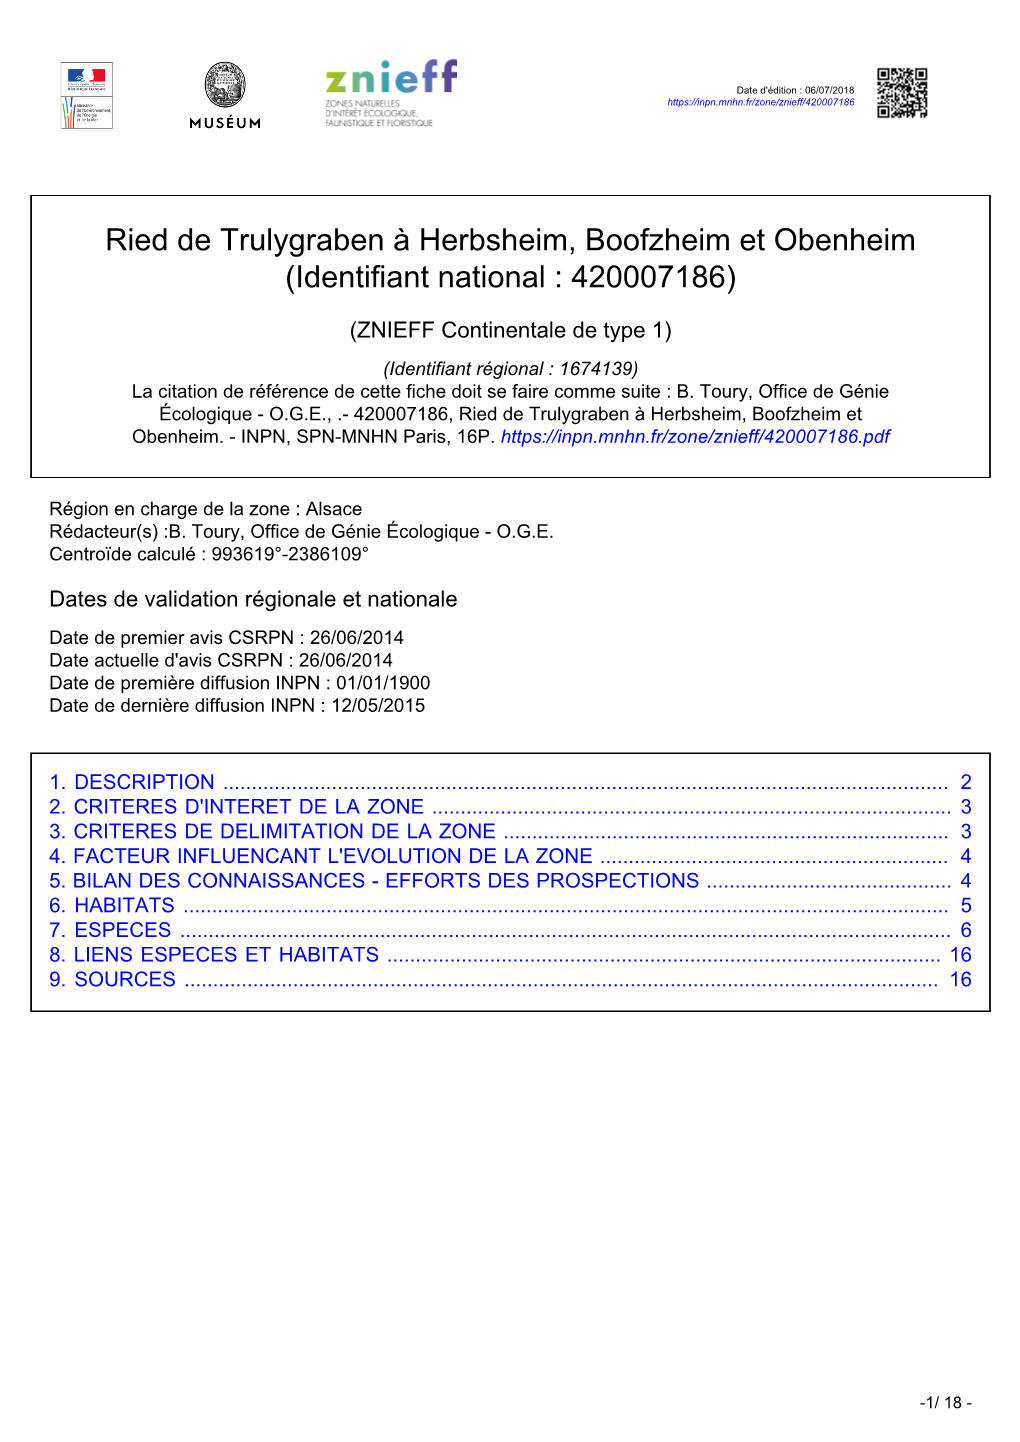 Ried De Trulygraben À Herbsheim, Boofzheim Et Obenheim (Identifiant National : 420007186)